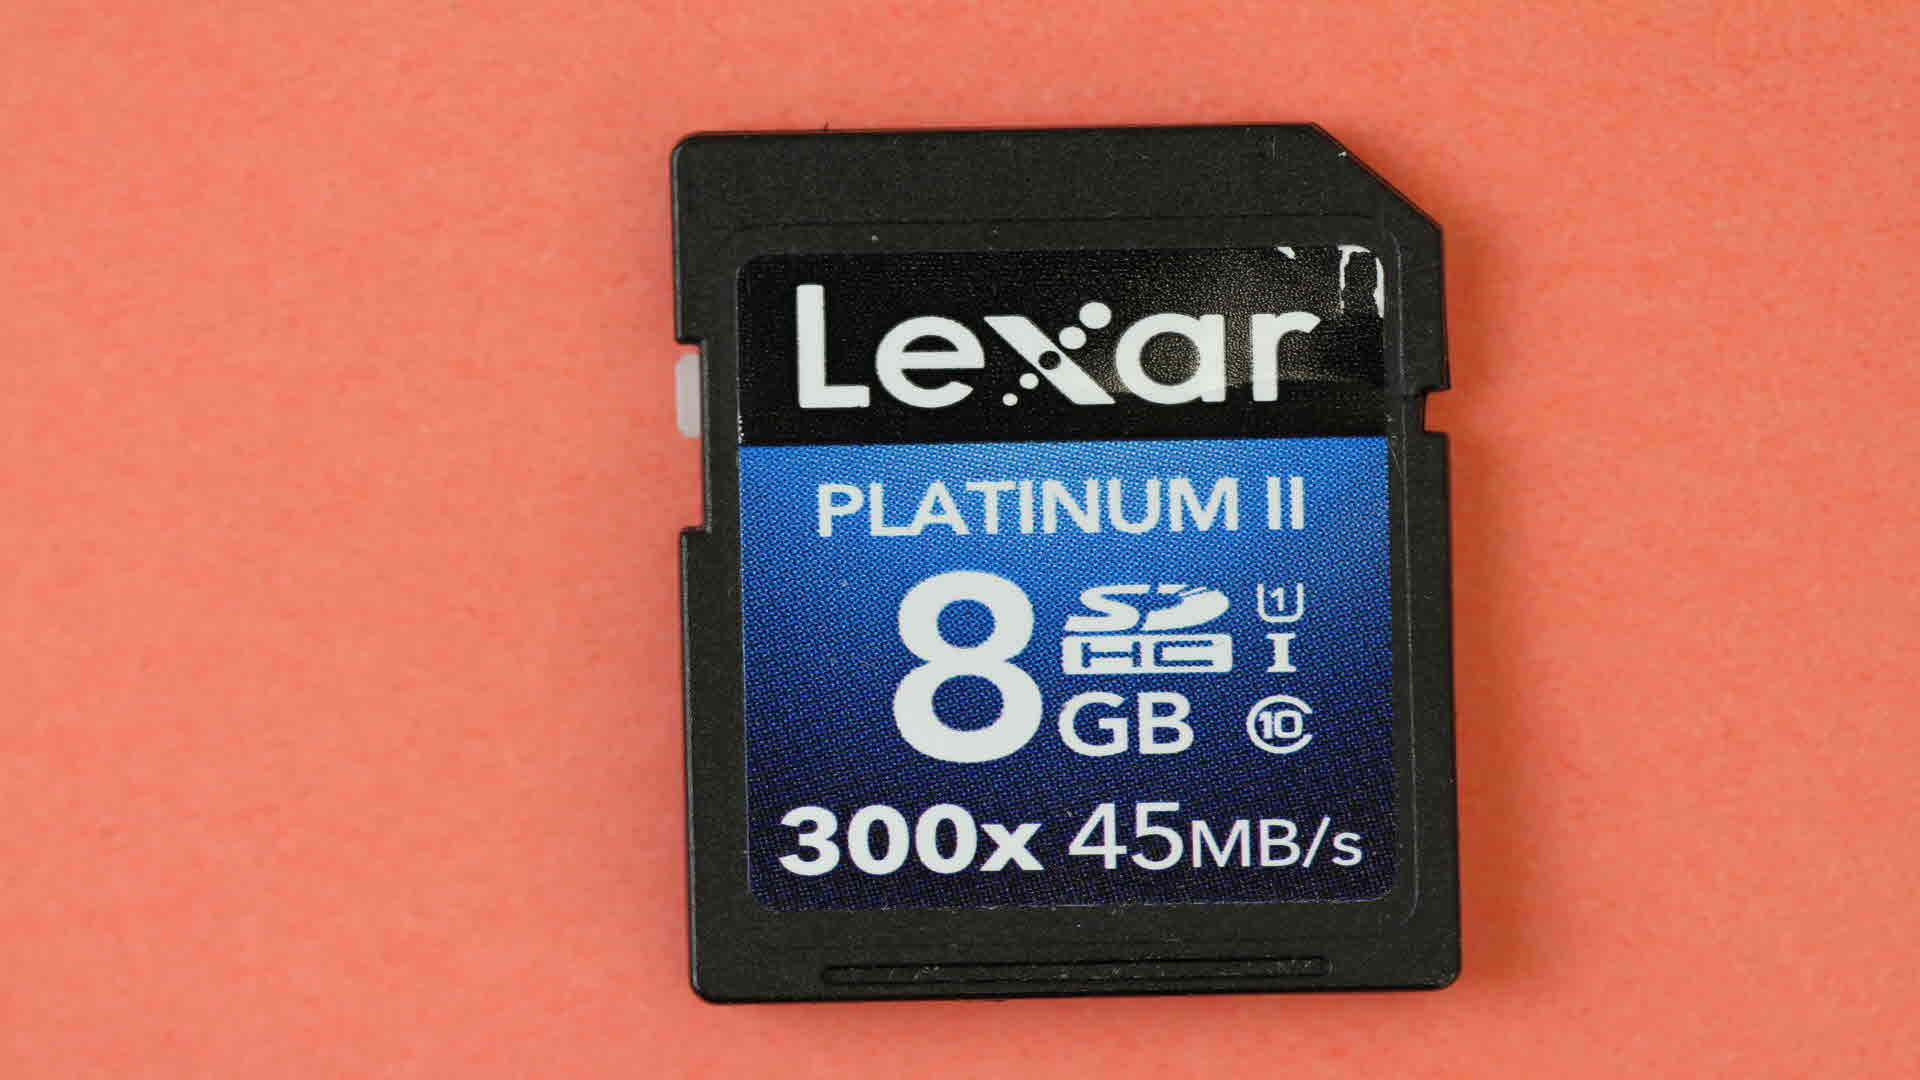 lexar-platinum ii-8gb-recovery